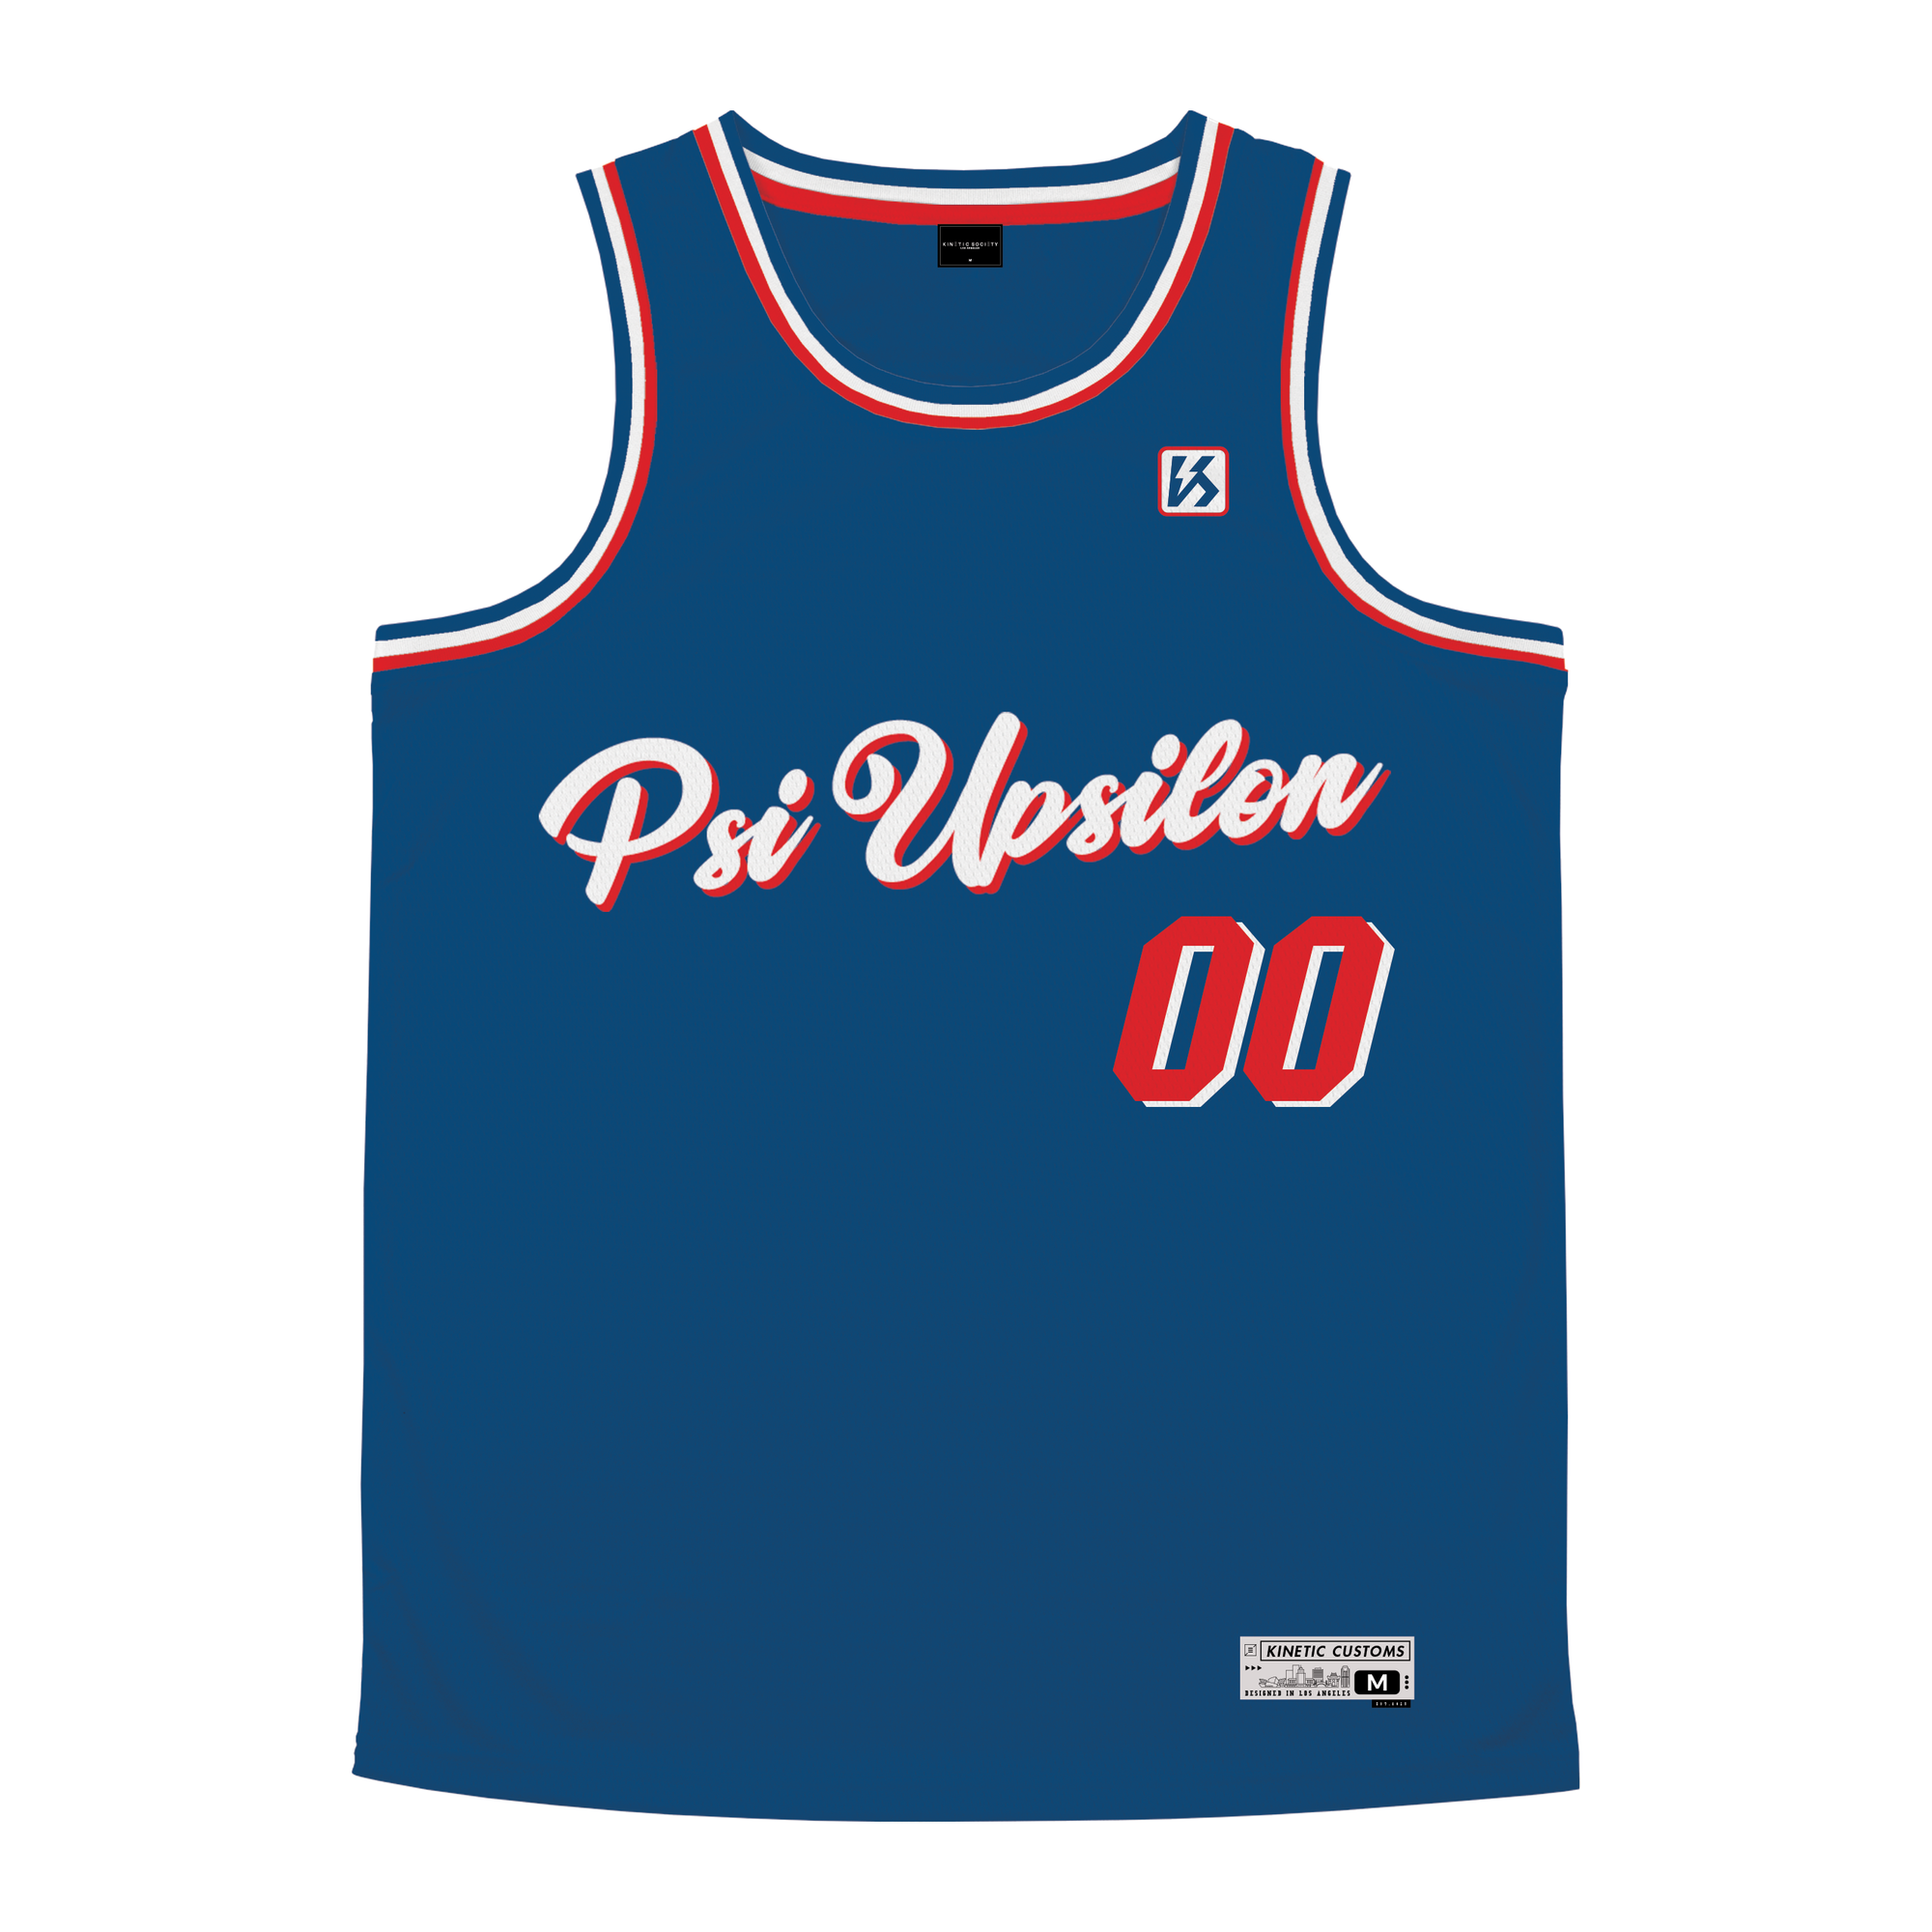 Psi Upsilon - The Dream Basketball Jersey